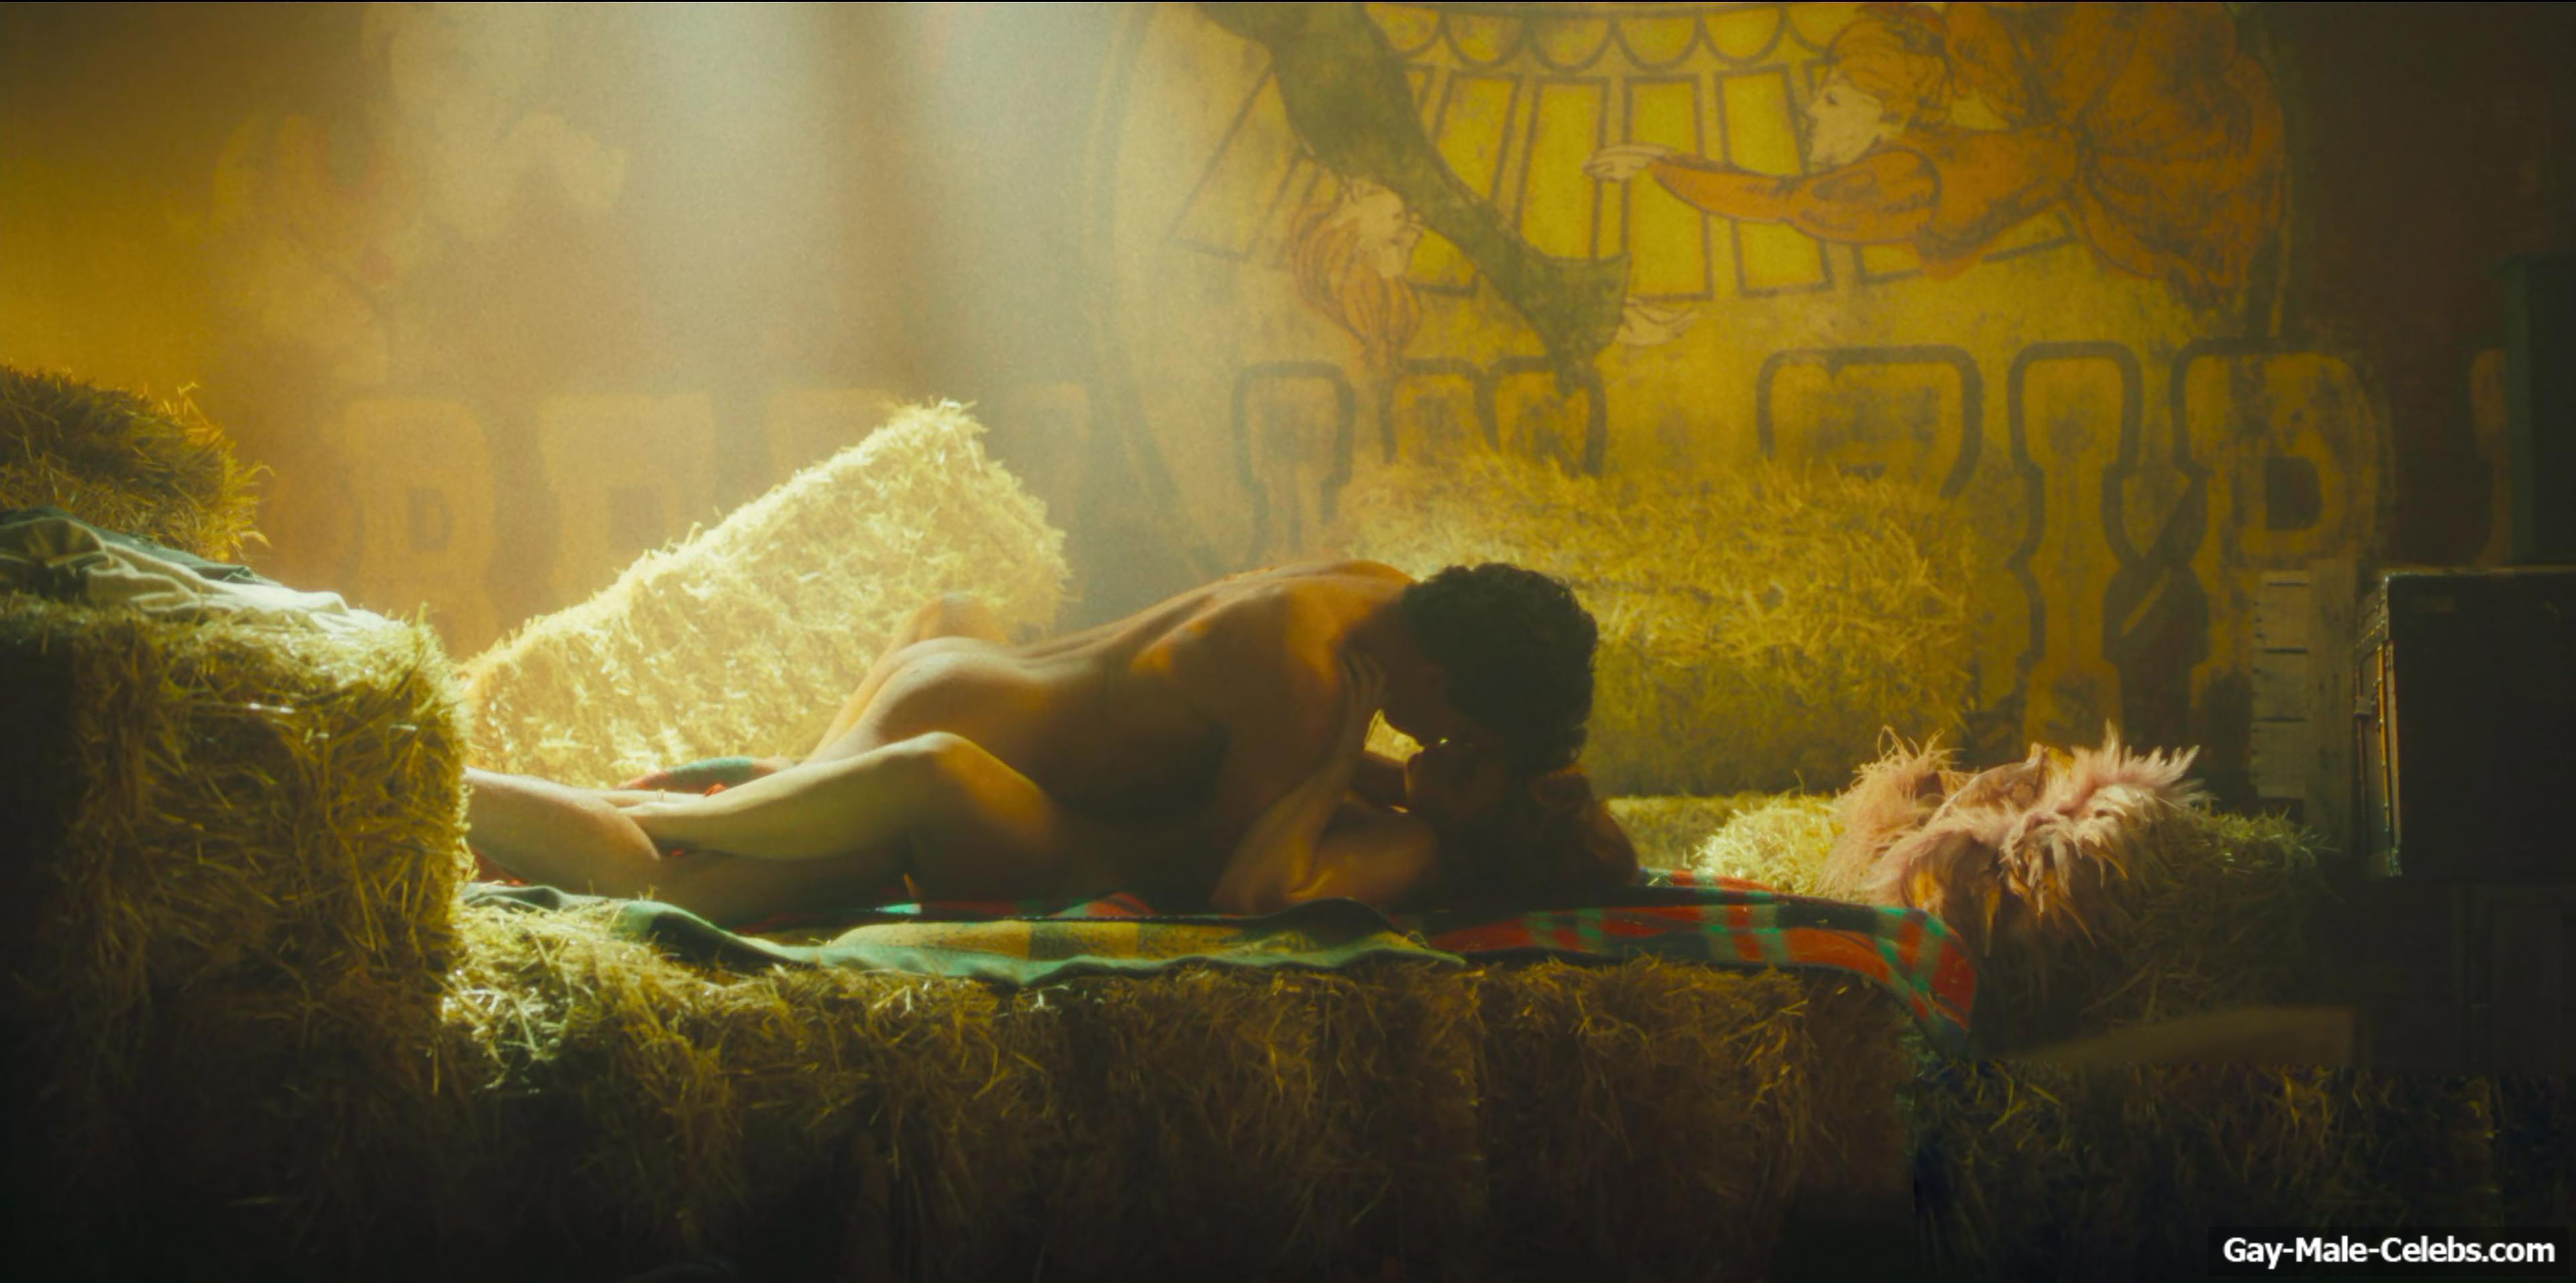 Jaime Lorente Nude And Sex Movie Scenes